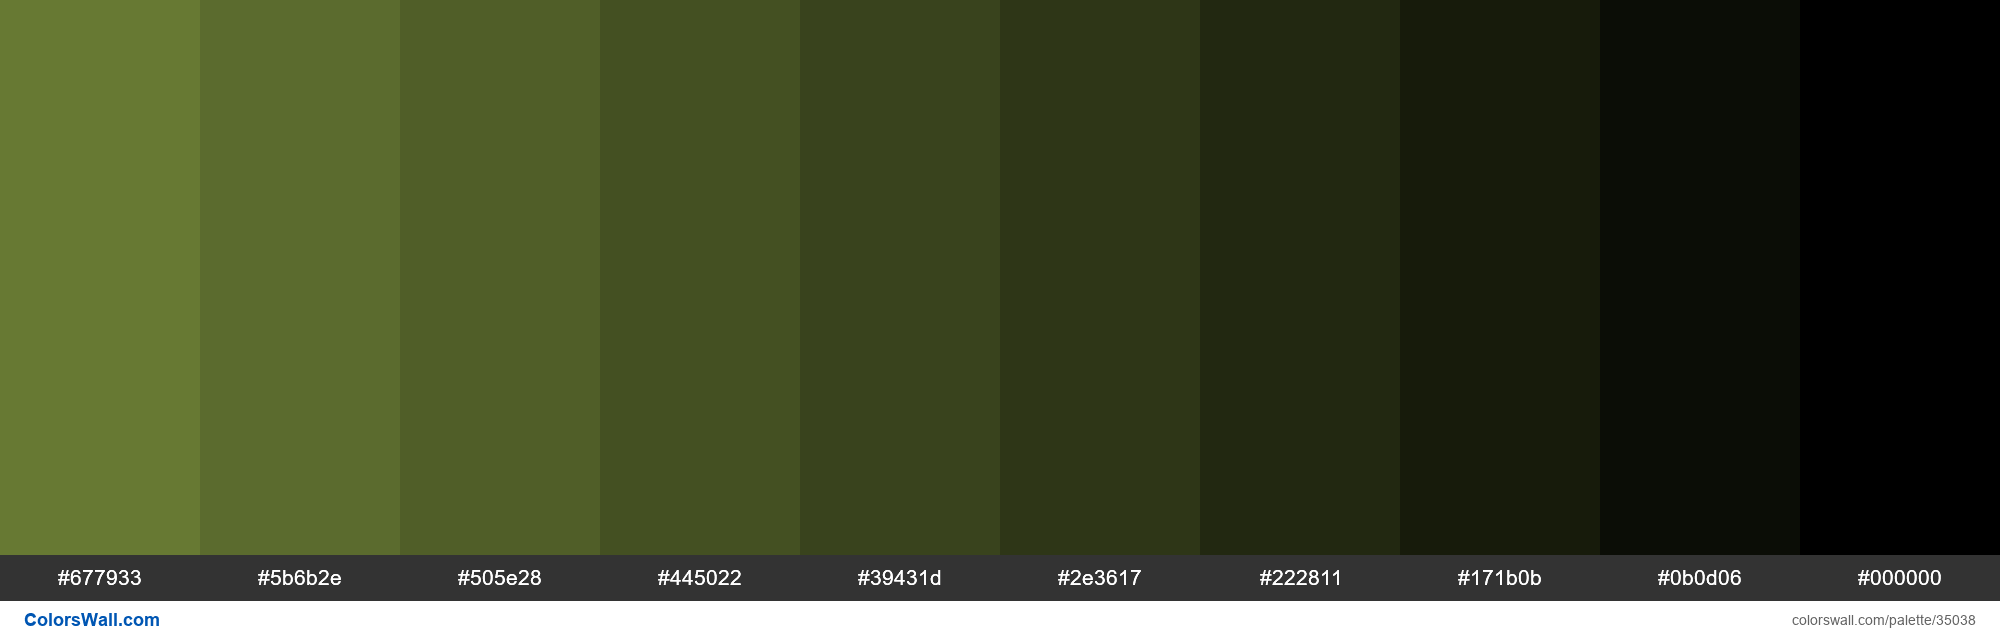 Shades XKCD Color khaki green #728639 hex colors palette - ColorsWall